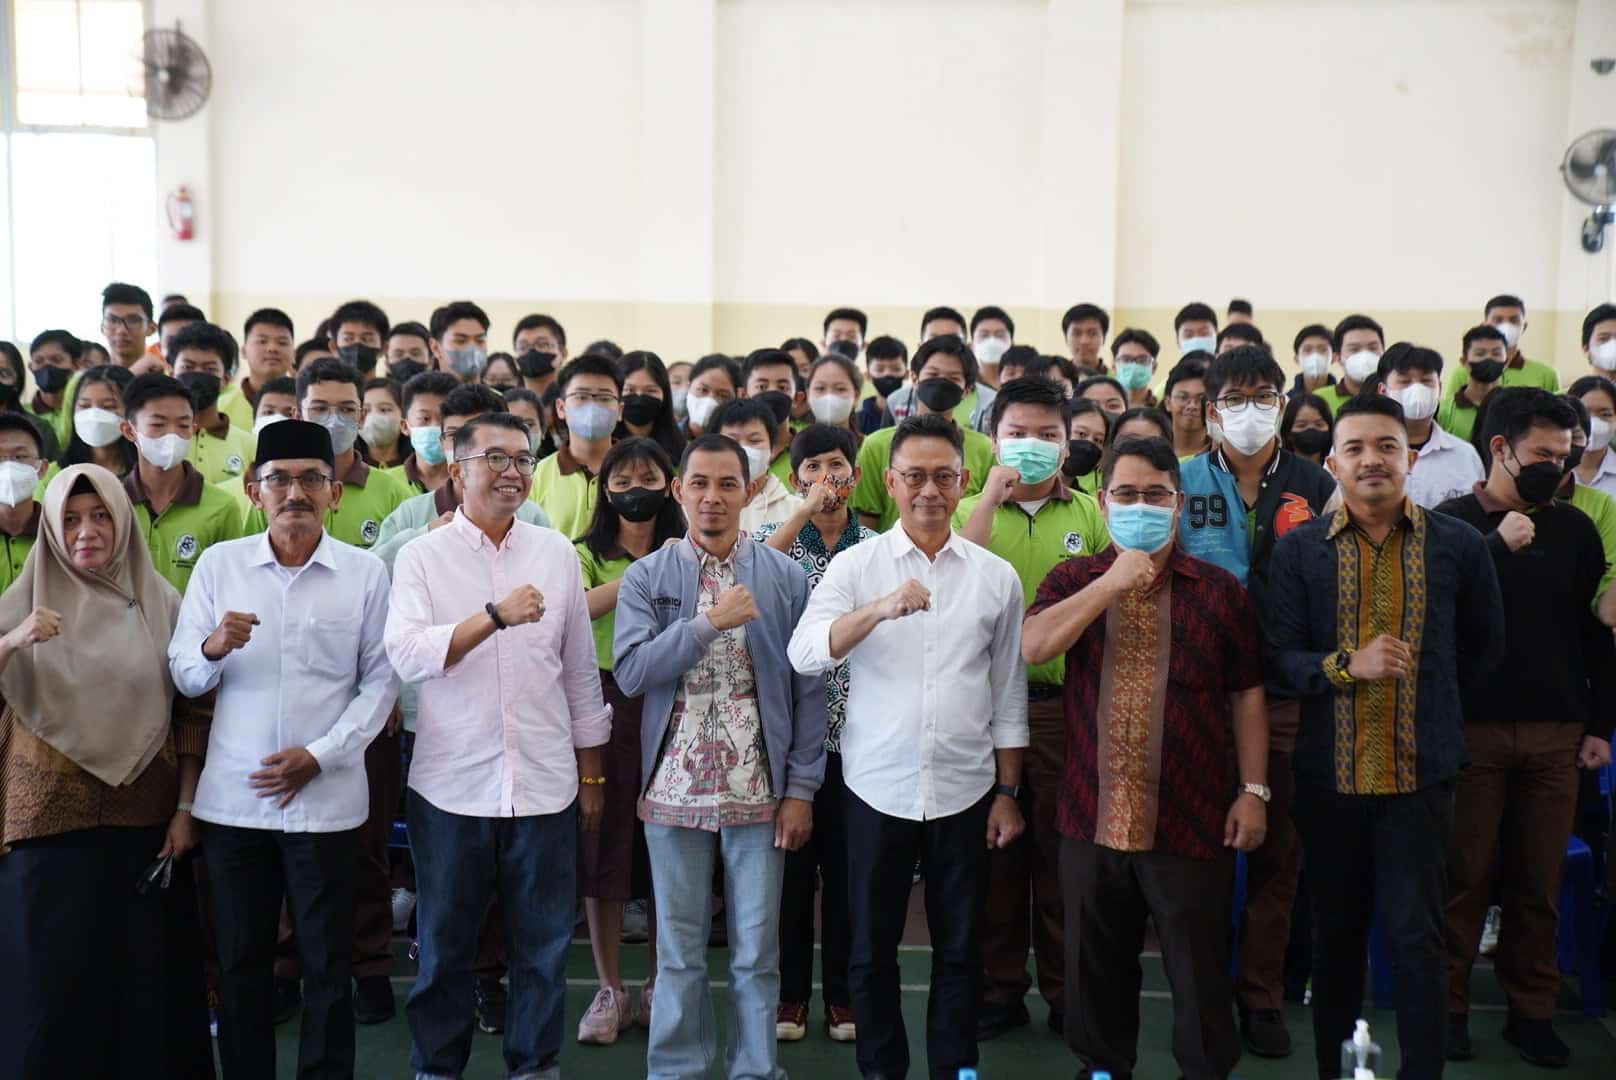 Wali Kota Pontianak, Edi Rusdi Kamtono berfoto bersama peserta sosialisasi pendidikan politik pemilih pemula di SMA Gembala Baik. (Prokopim For KalbarOnline.com)